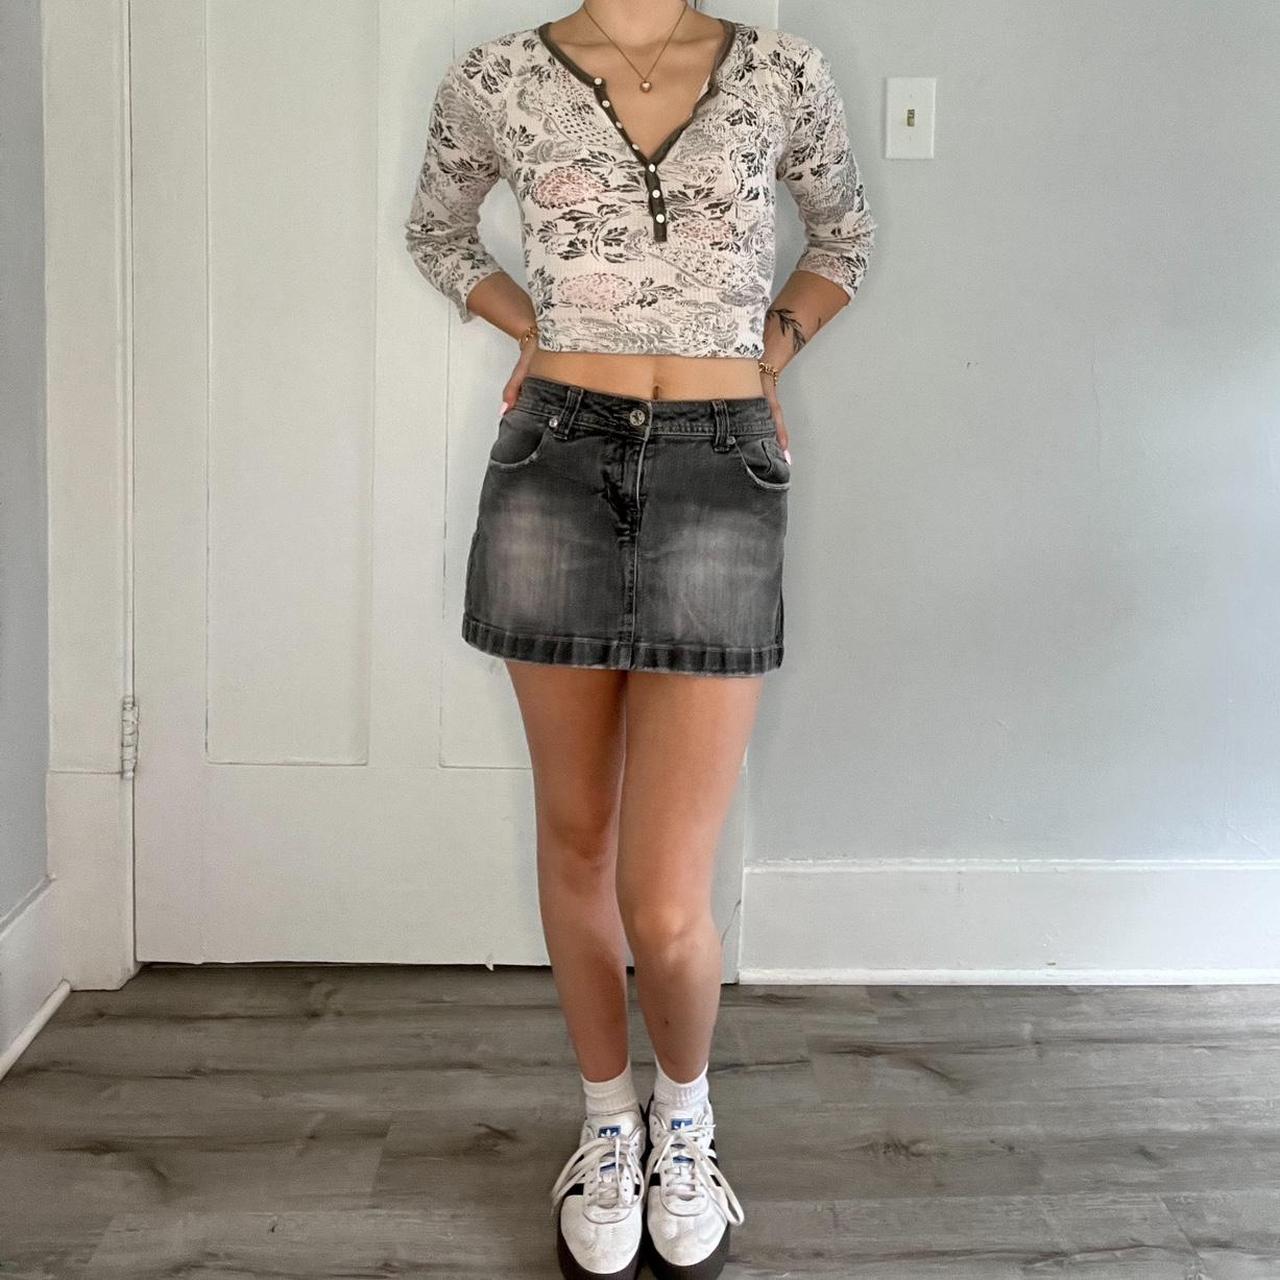 Grunge mini skirt! - Grey faded mini skirt with... - Depop